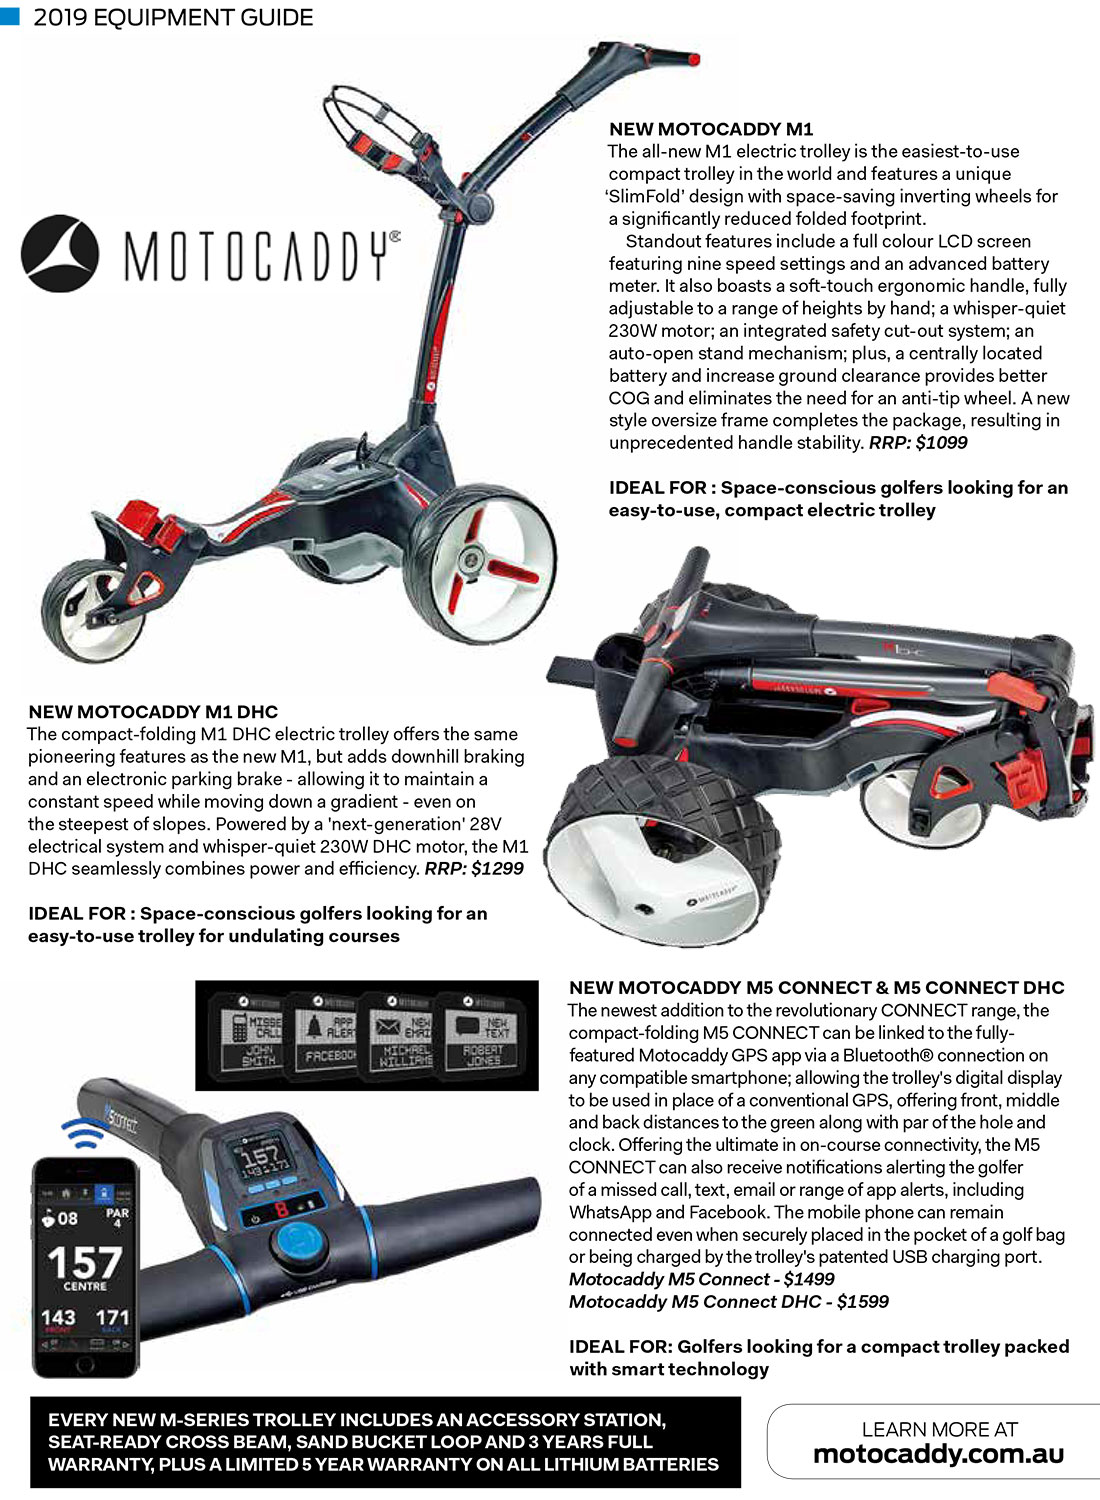 2019 Equipment Guide: Motocaddy